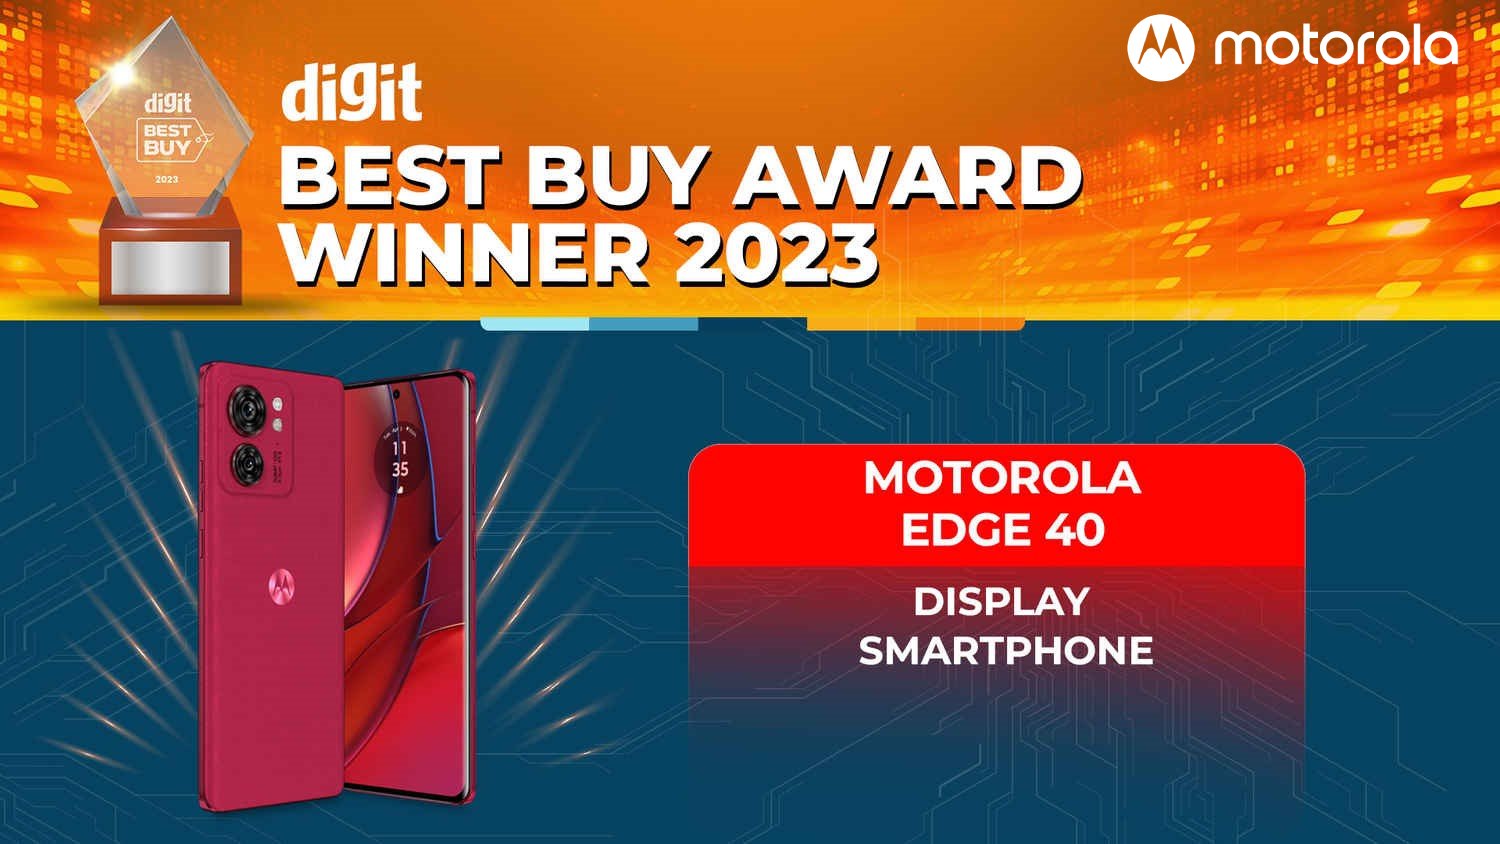 Smartphone with best display - motorola edge